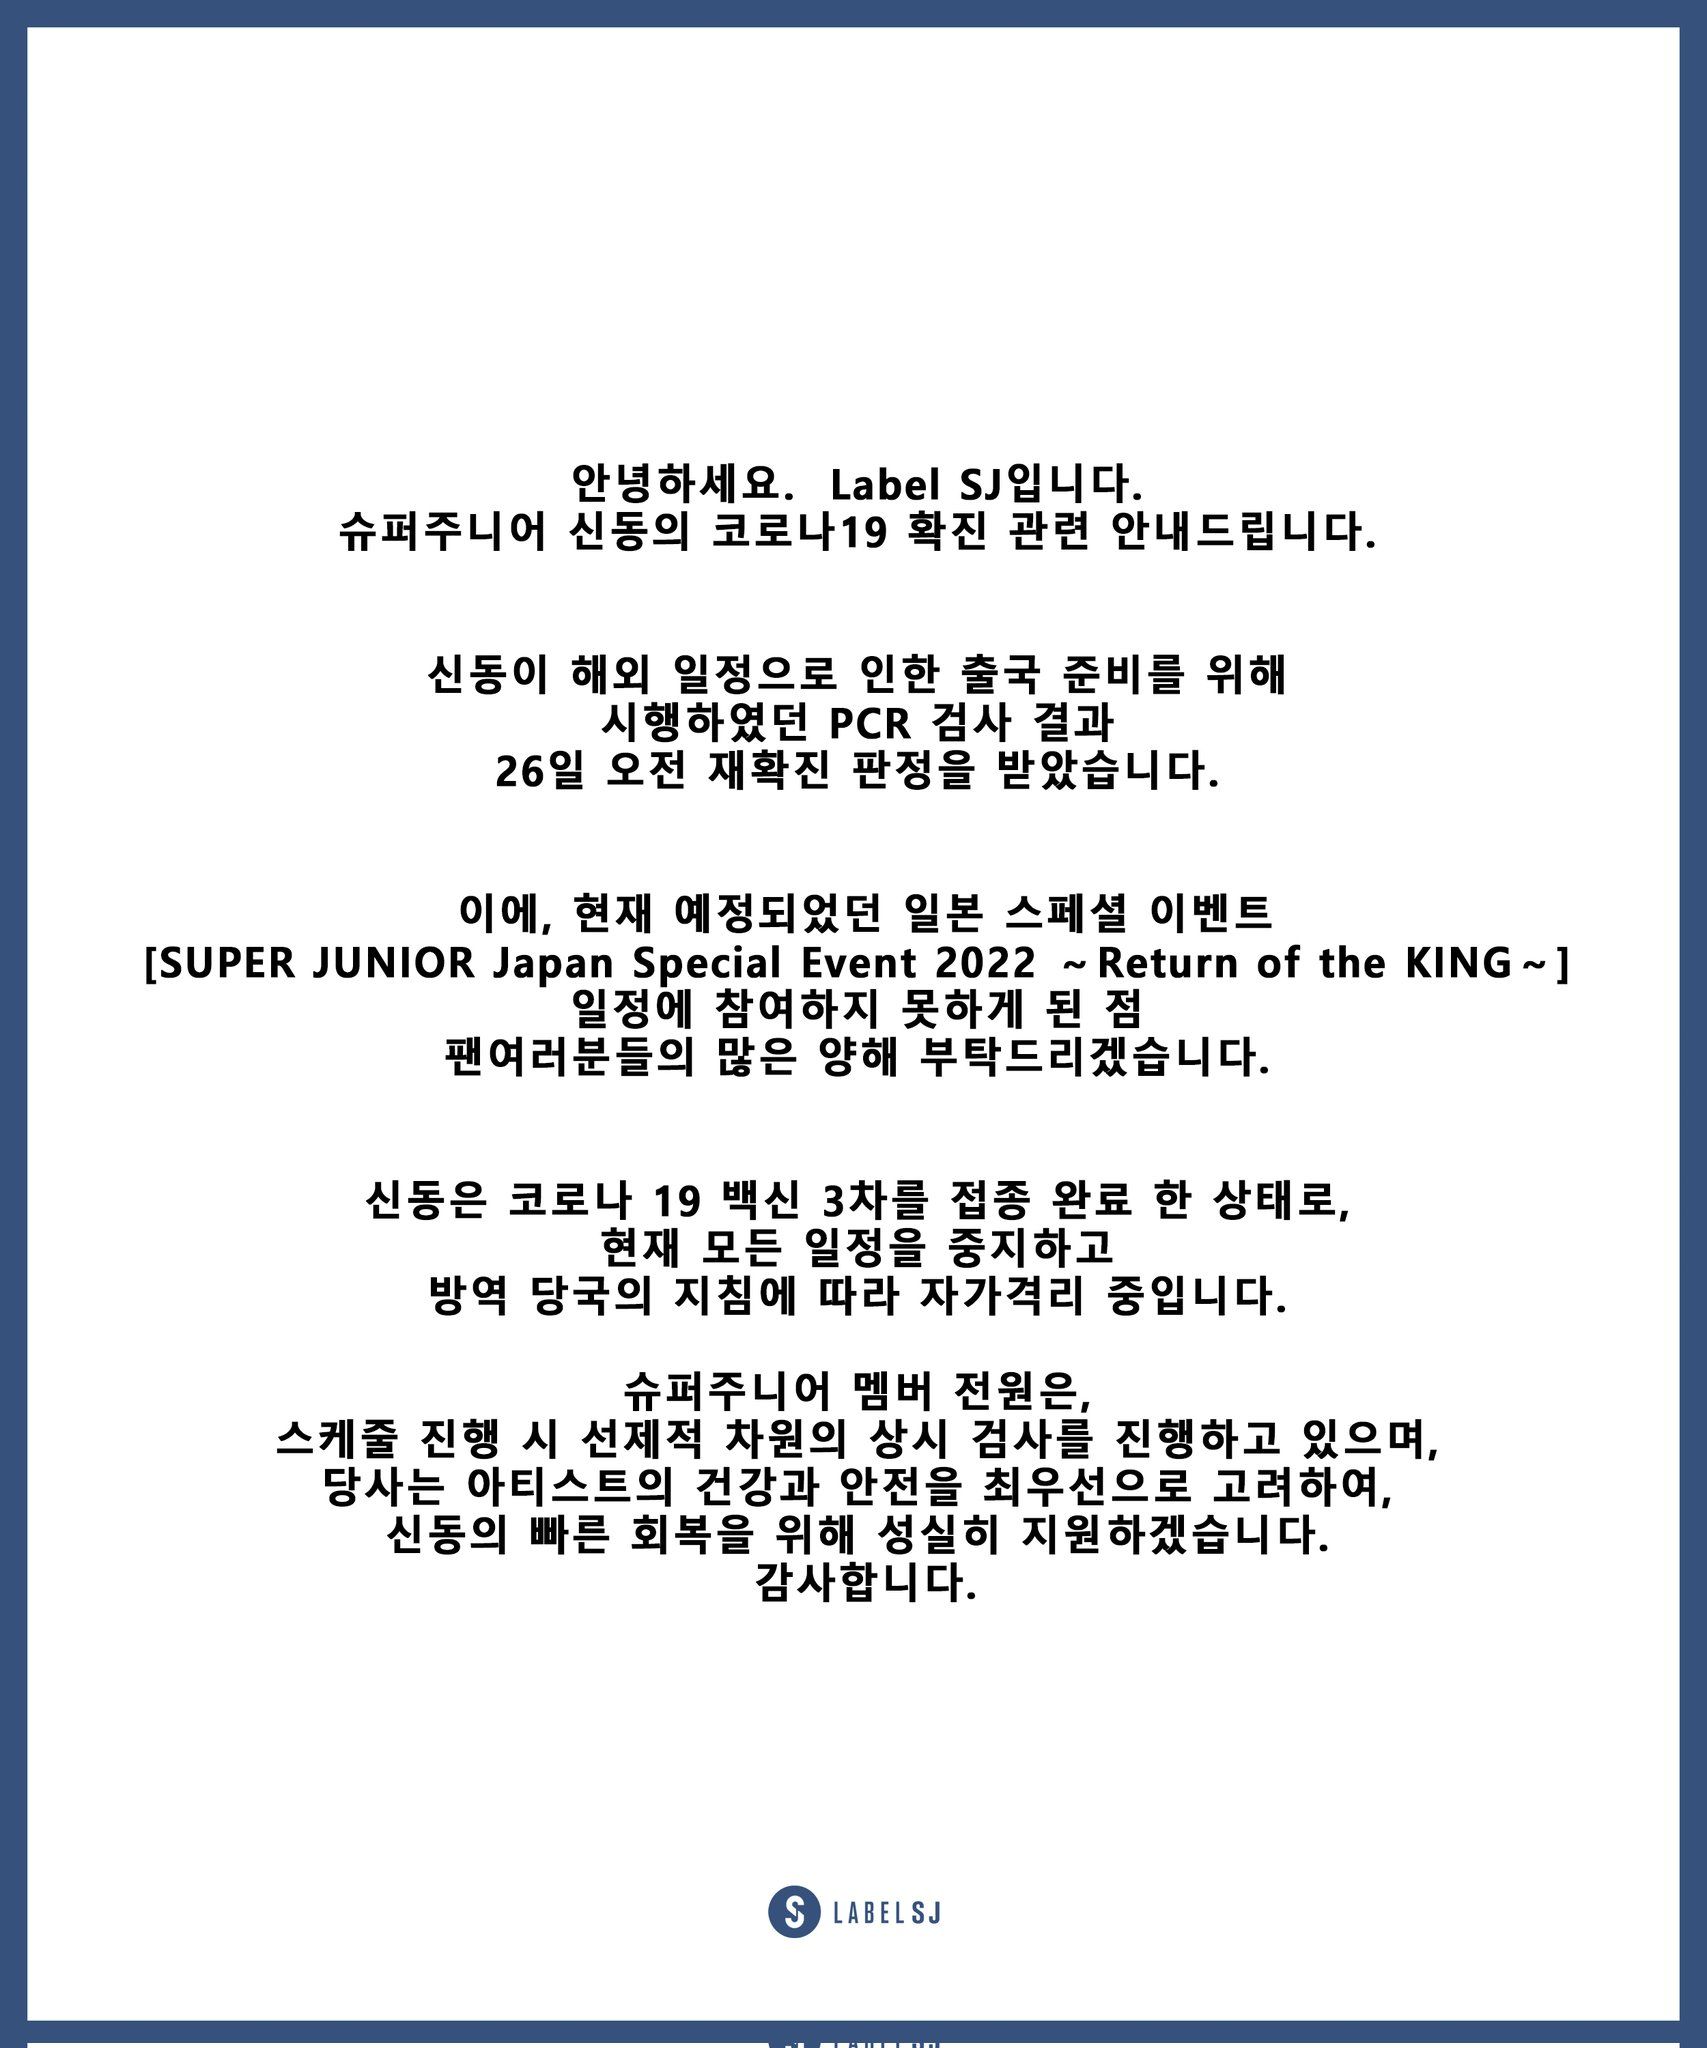 Label SJ merilis pernyataan 